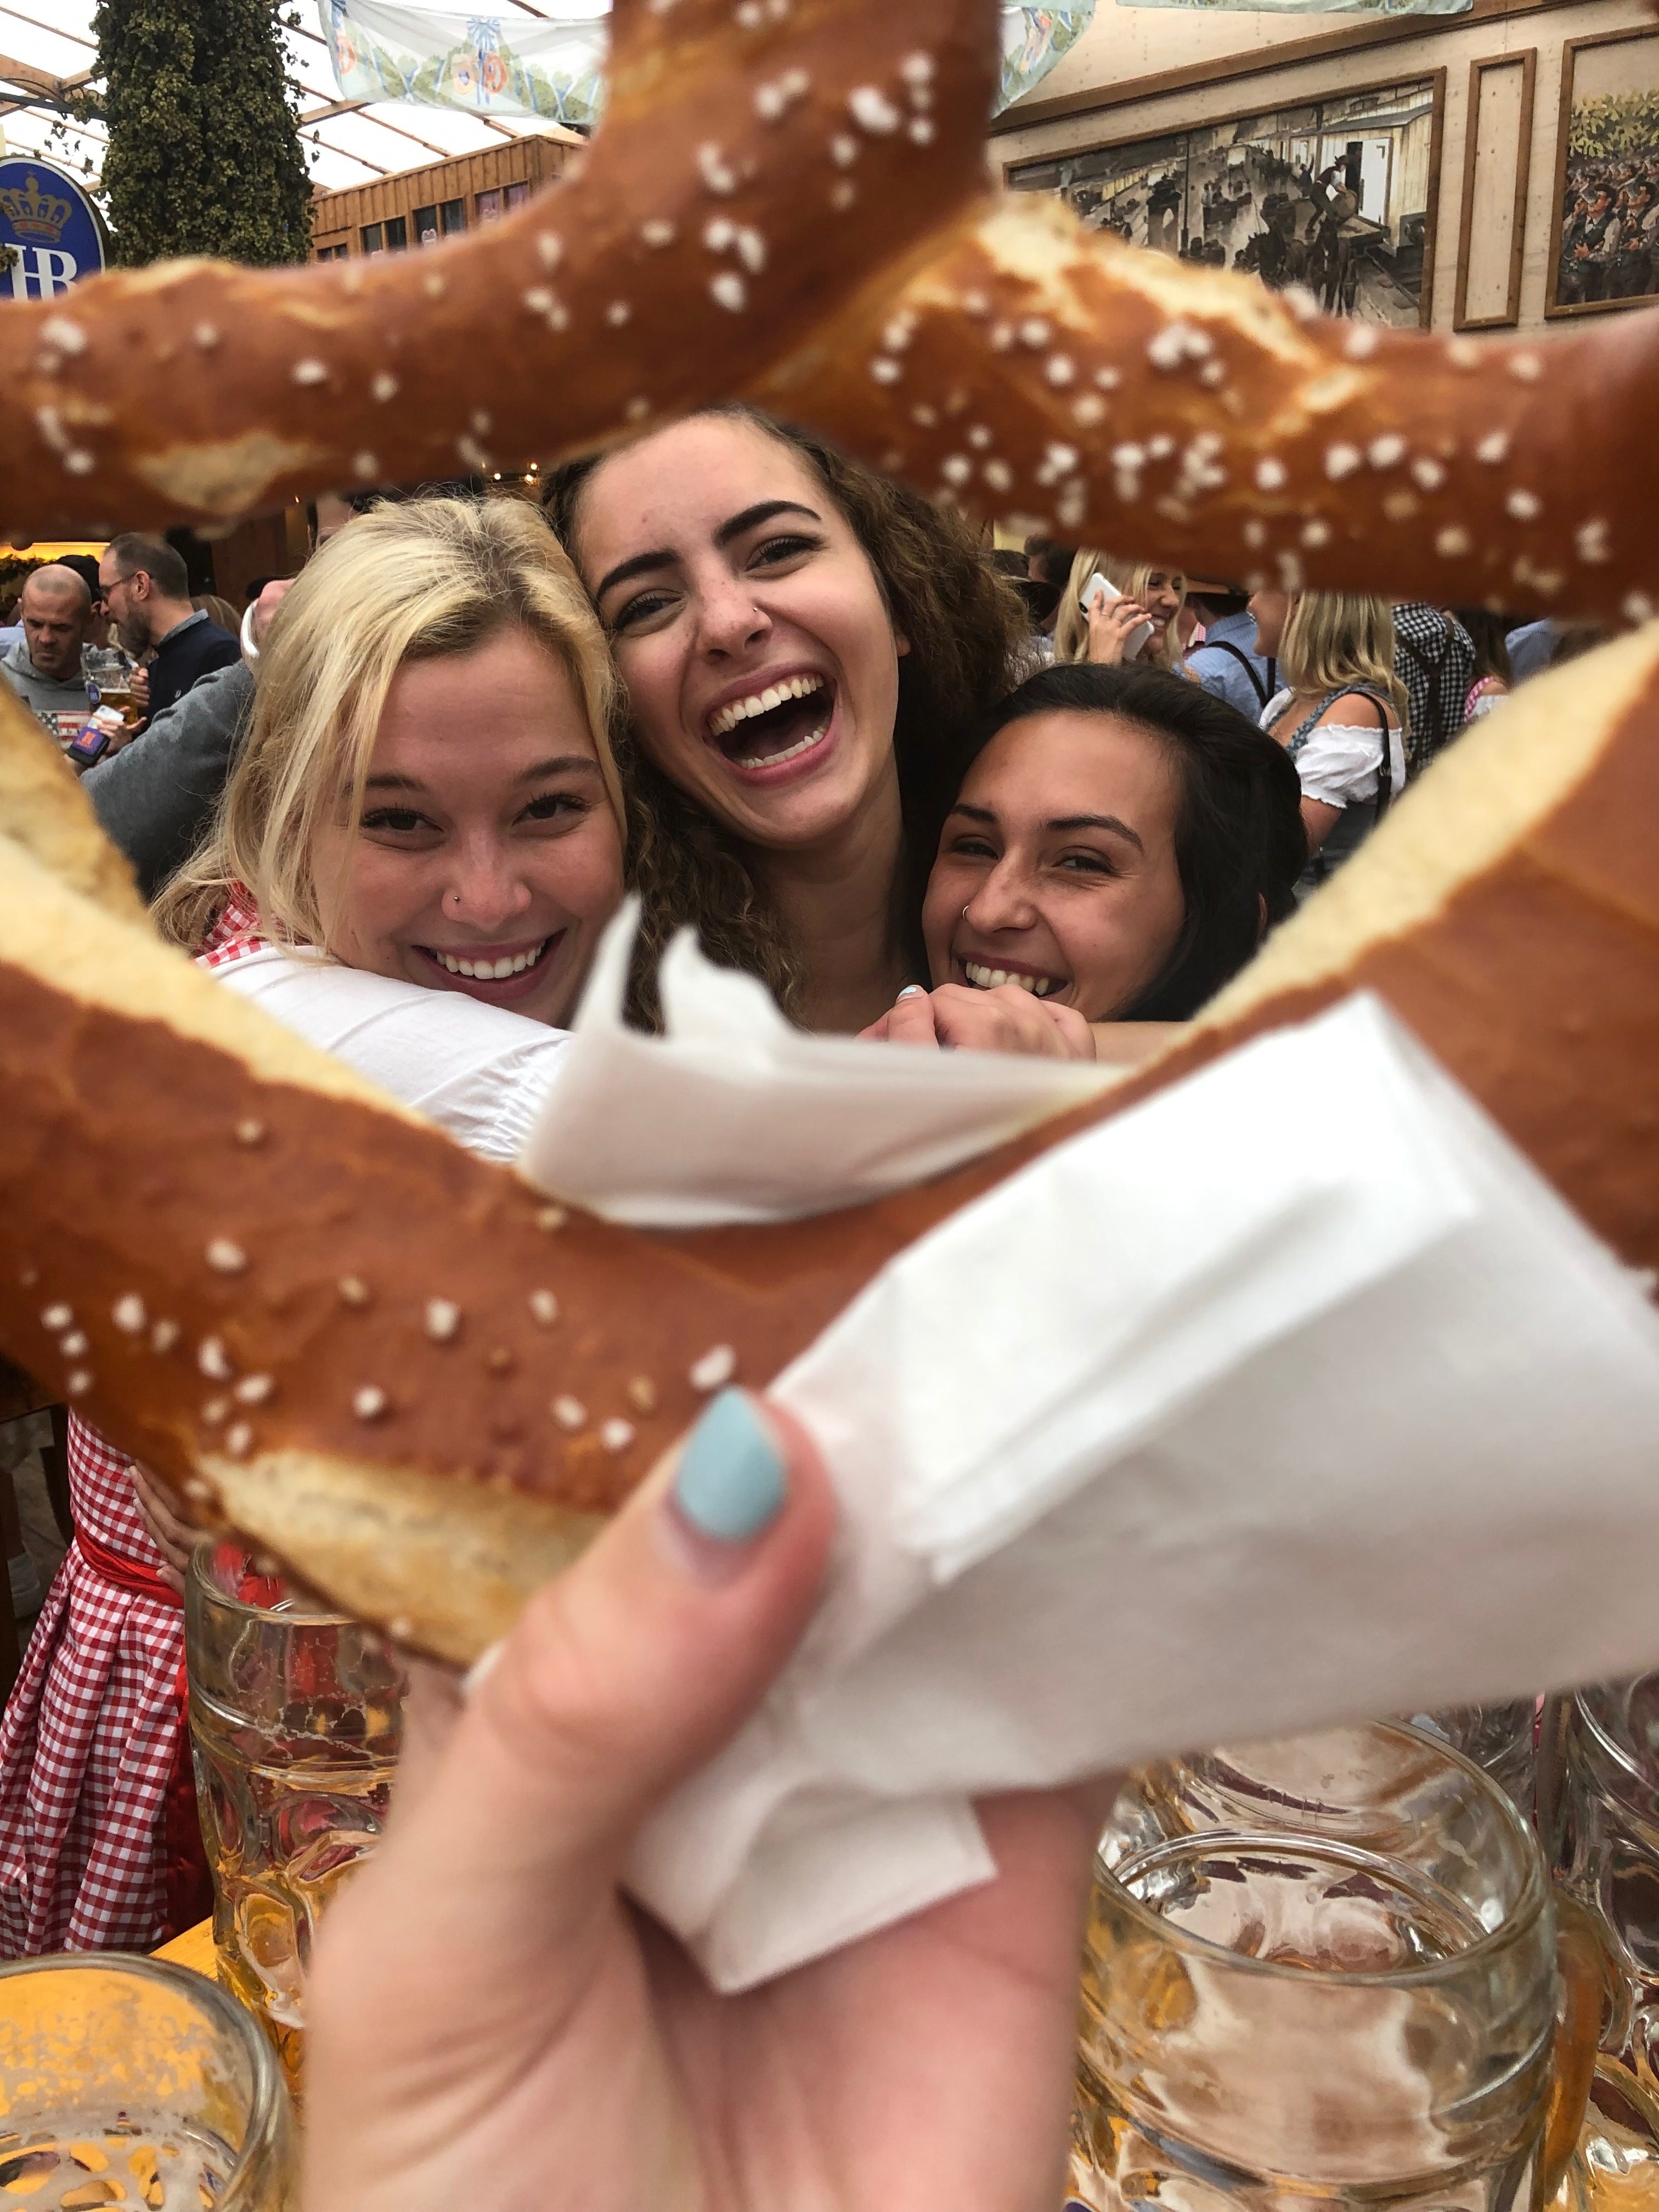 German girls eating pretzels.